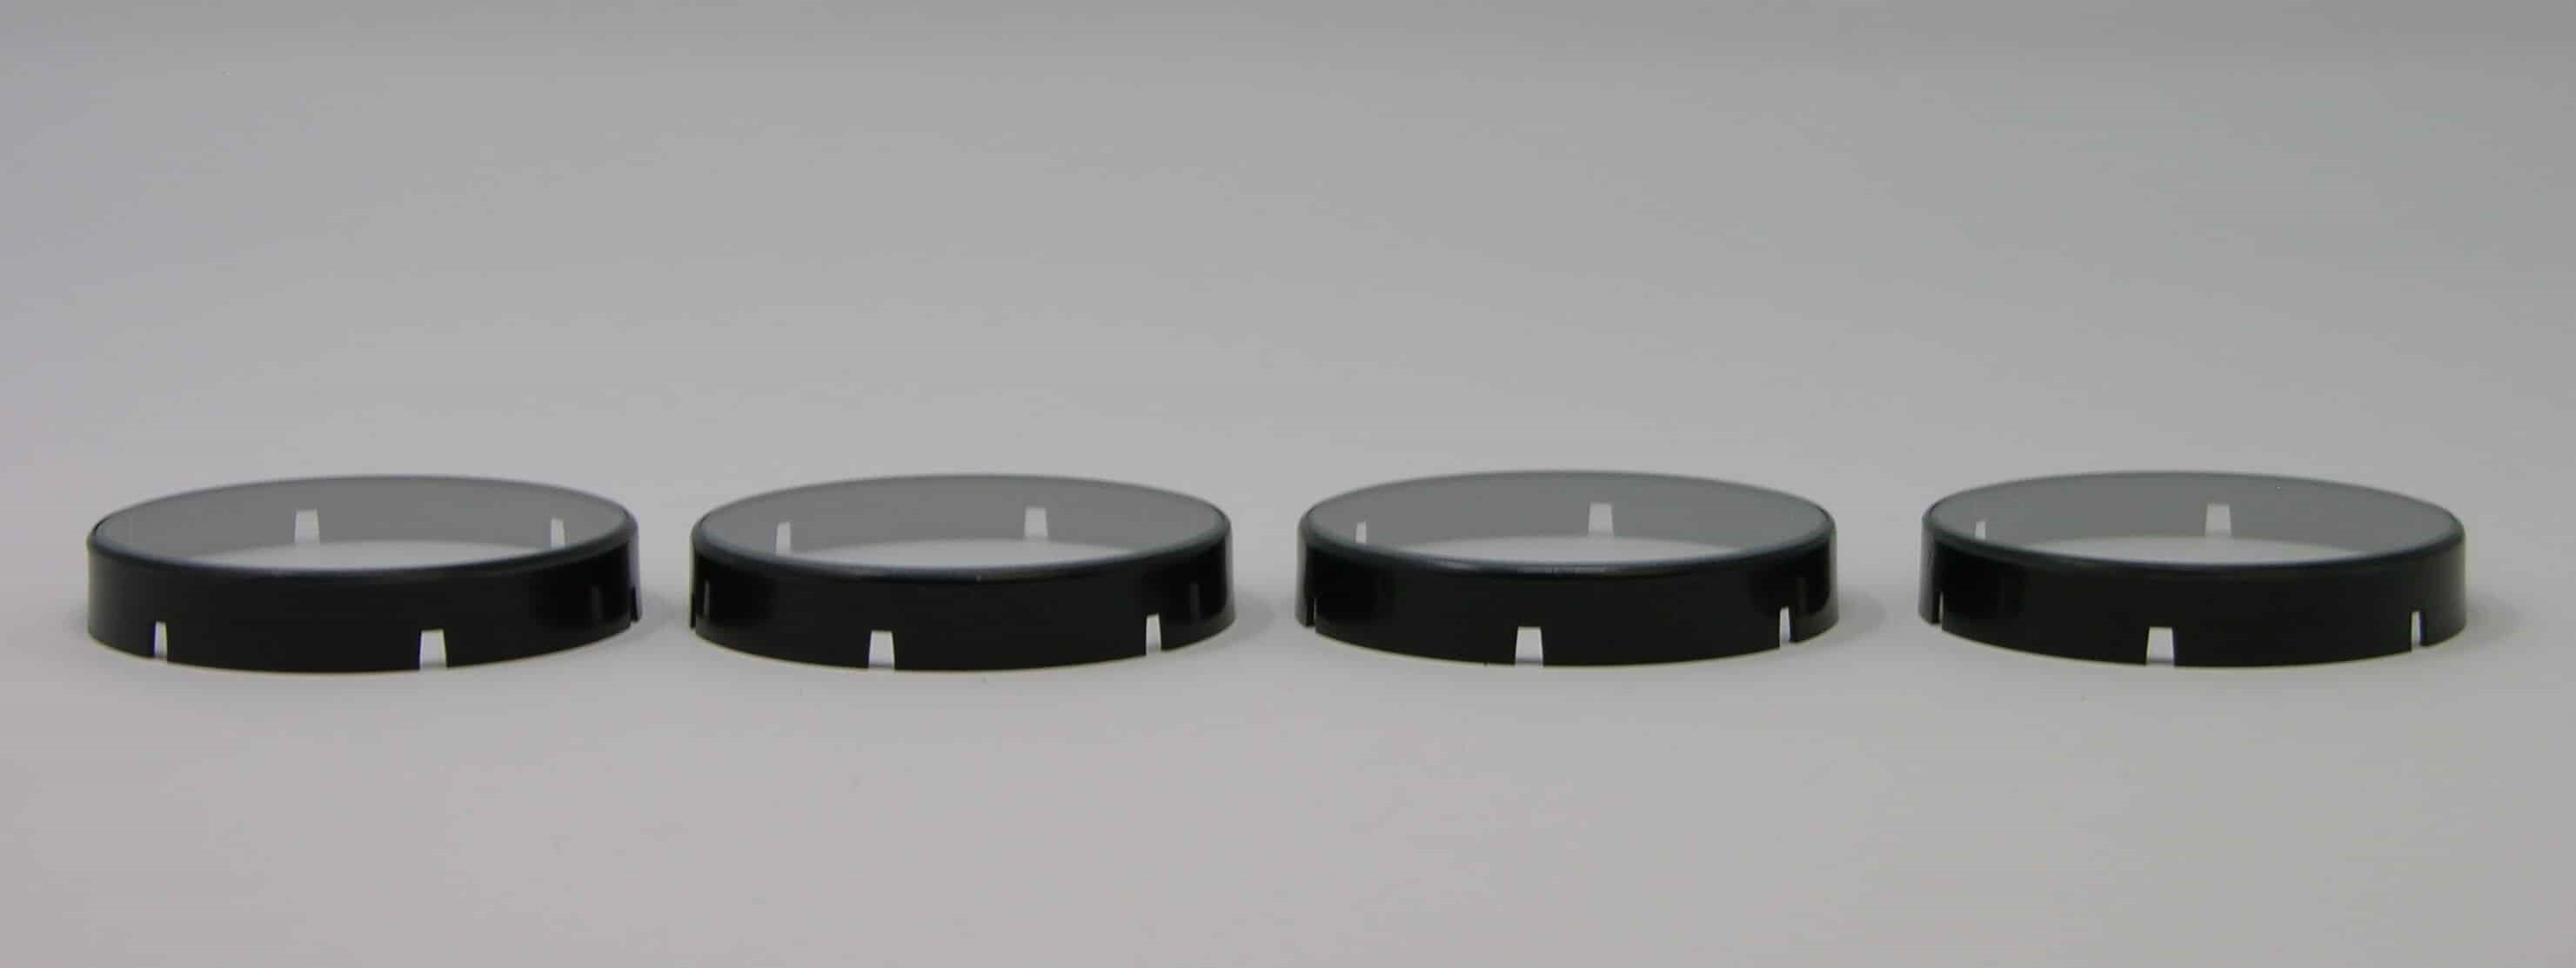 Elite Disposable Lens Protection Caps for 4x, 8x, 10x lenses (pack of 4) (NOTE: Disposable lens protection caps for Elite 2x lens are not available)